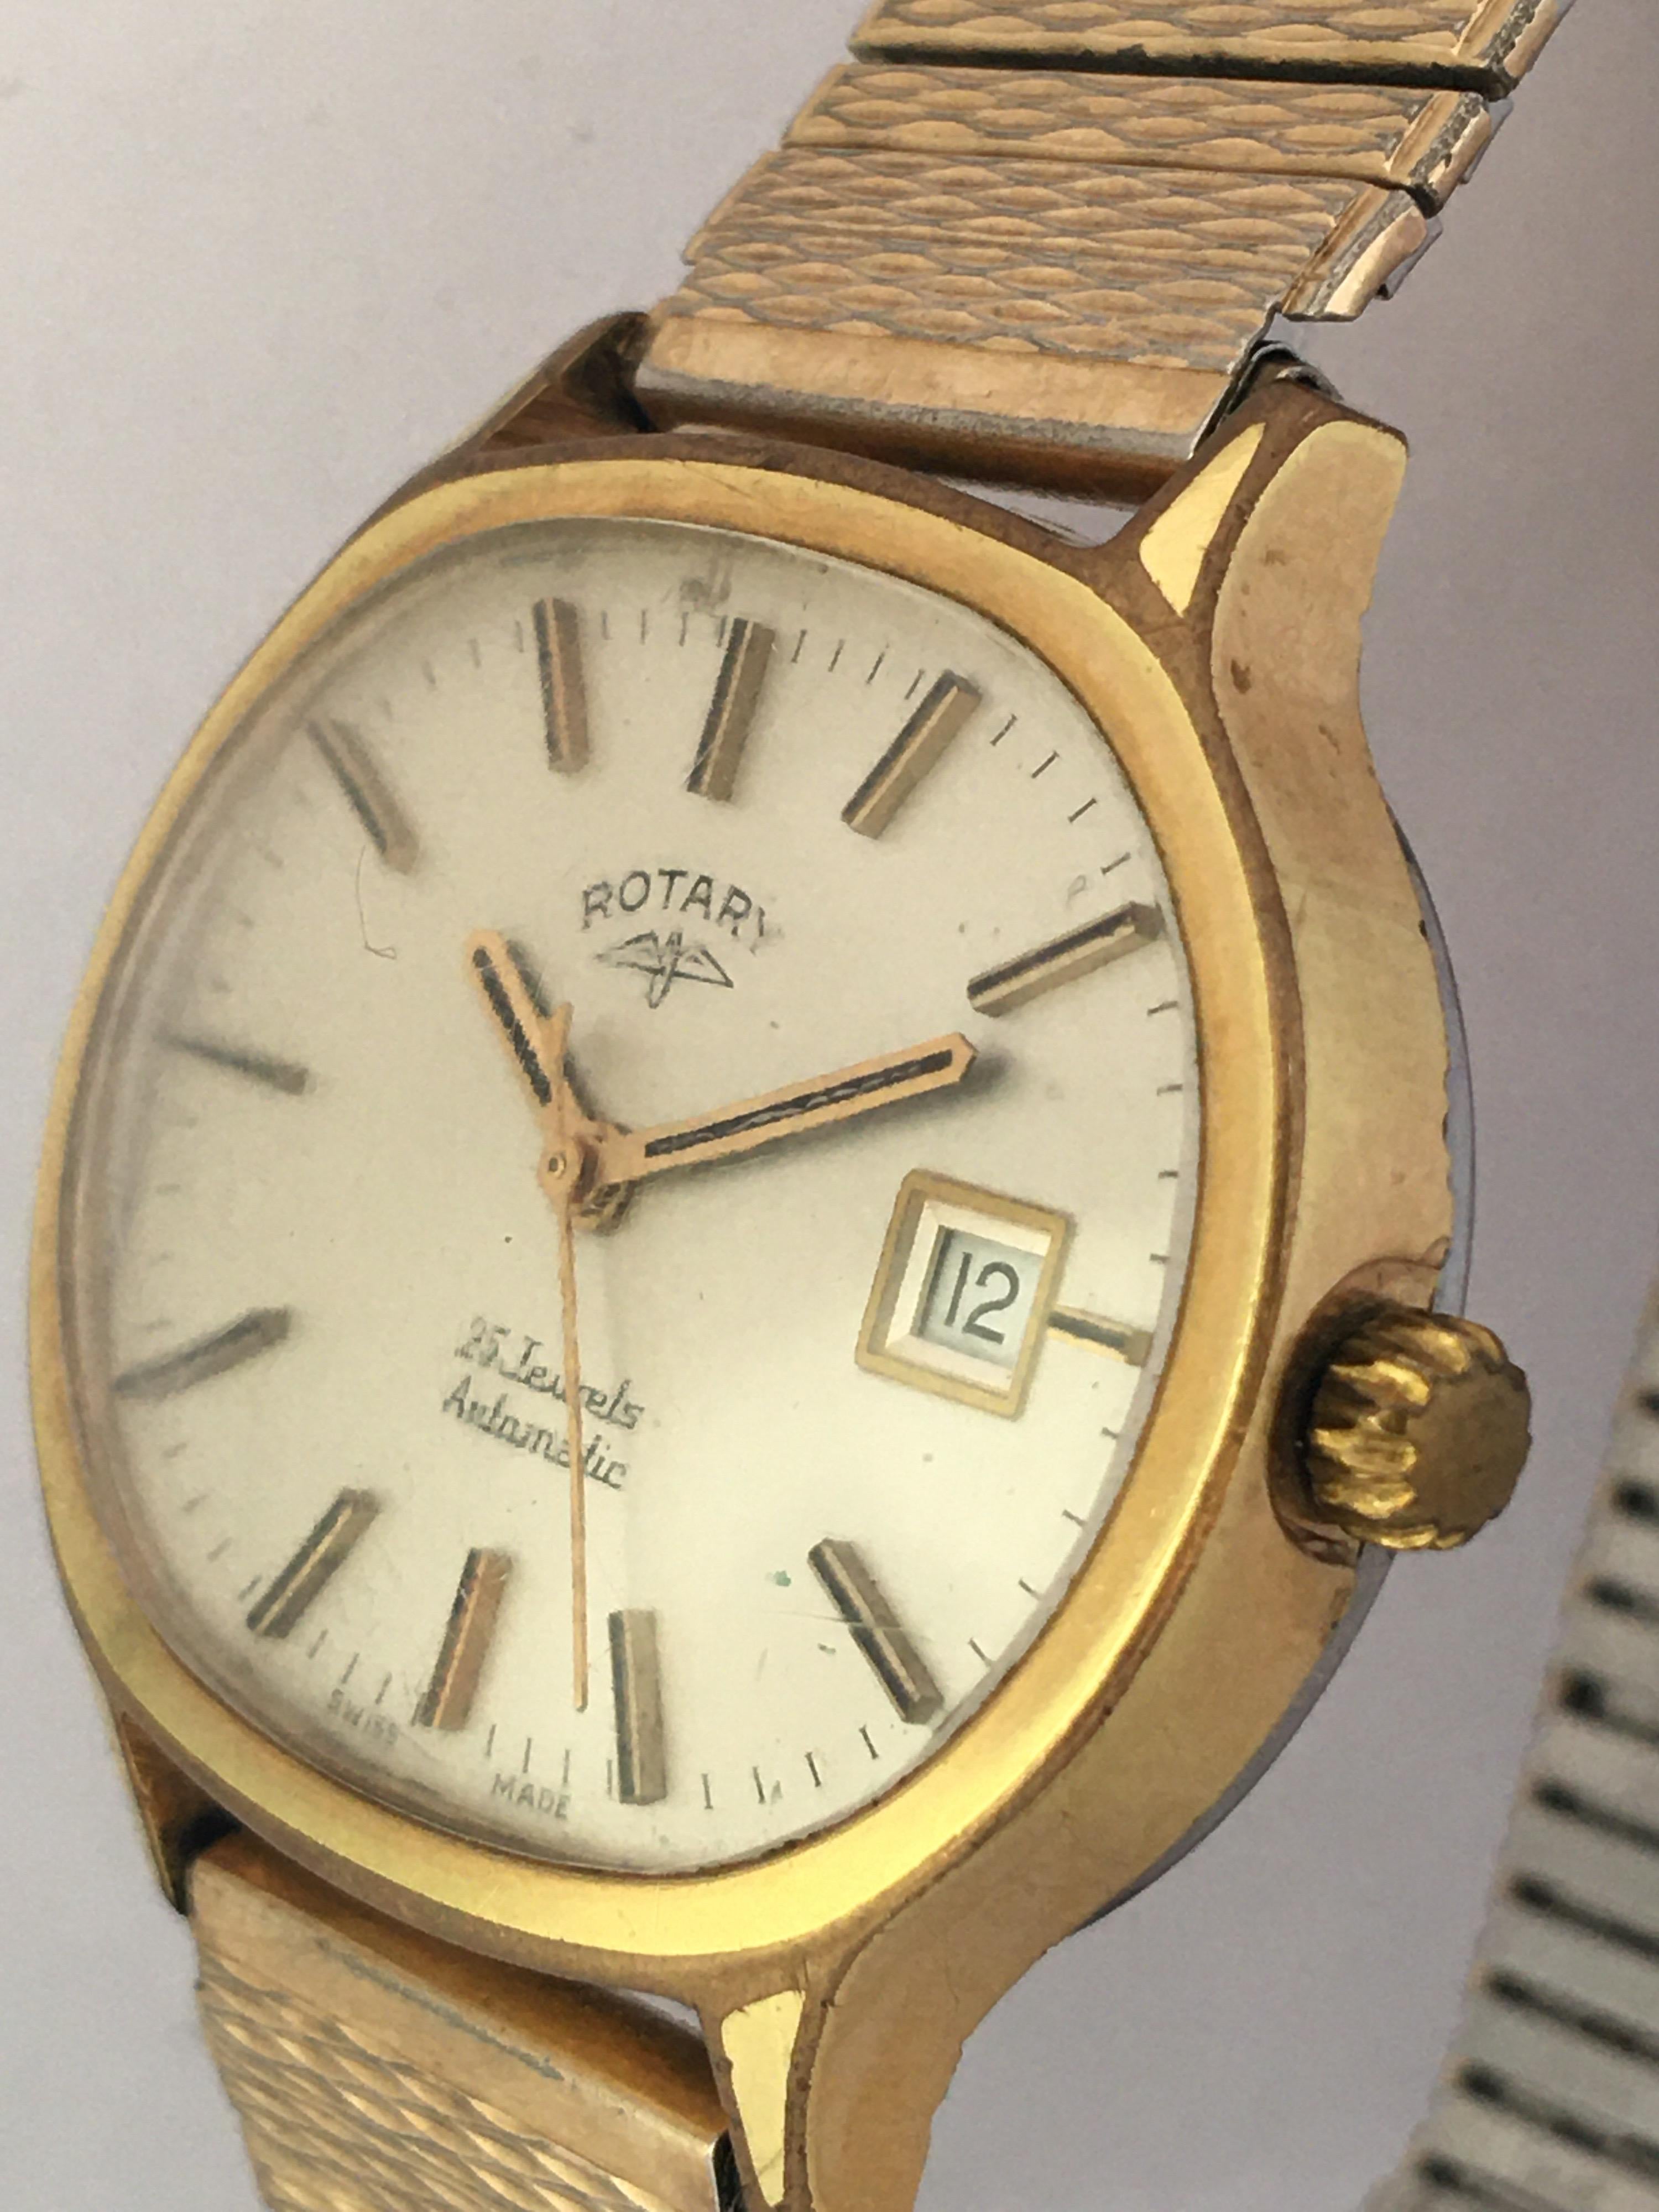 rotary 25 jewel automatic watch